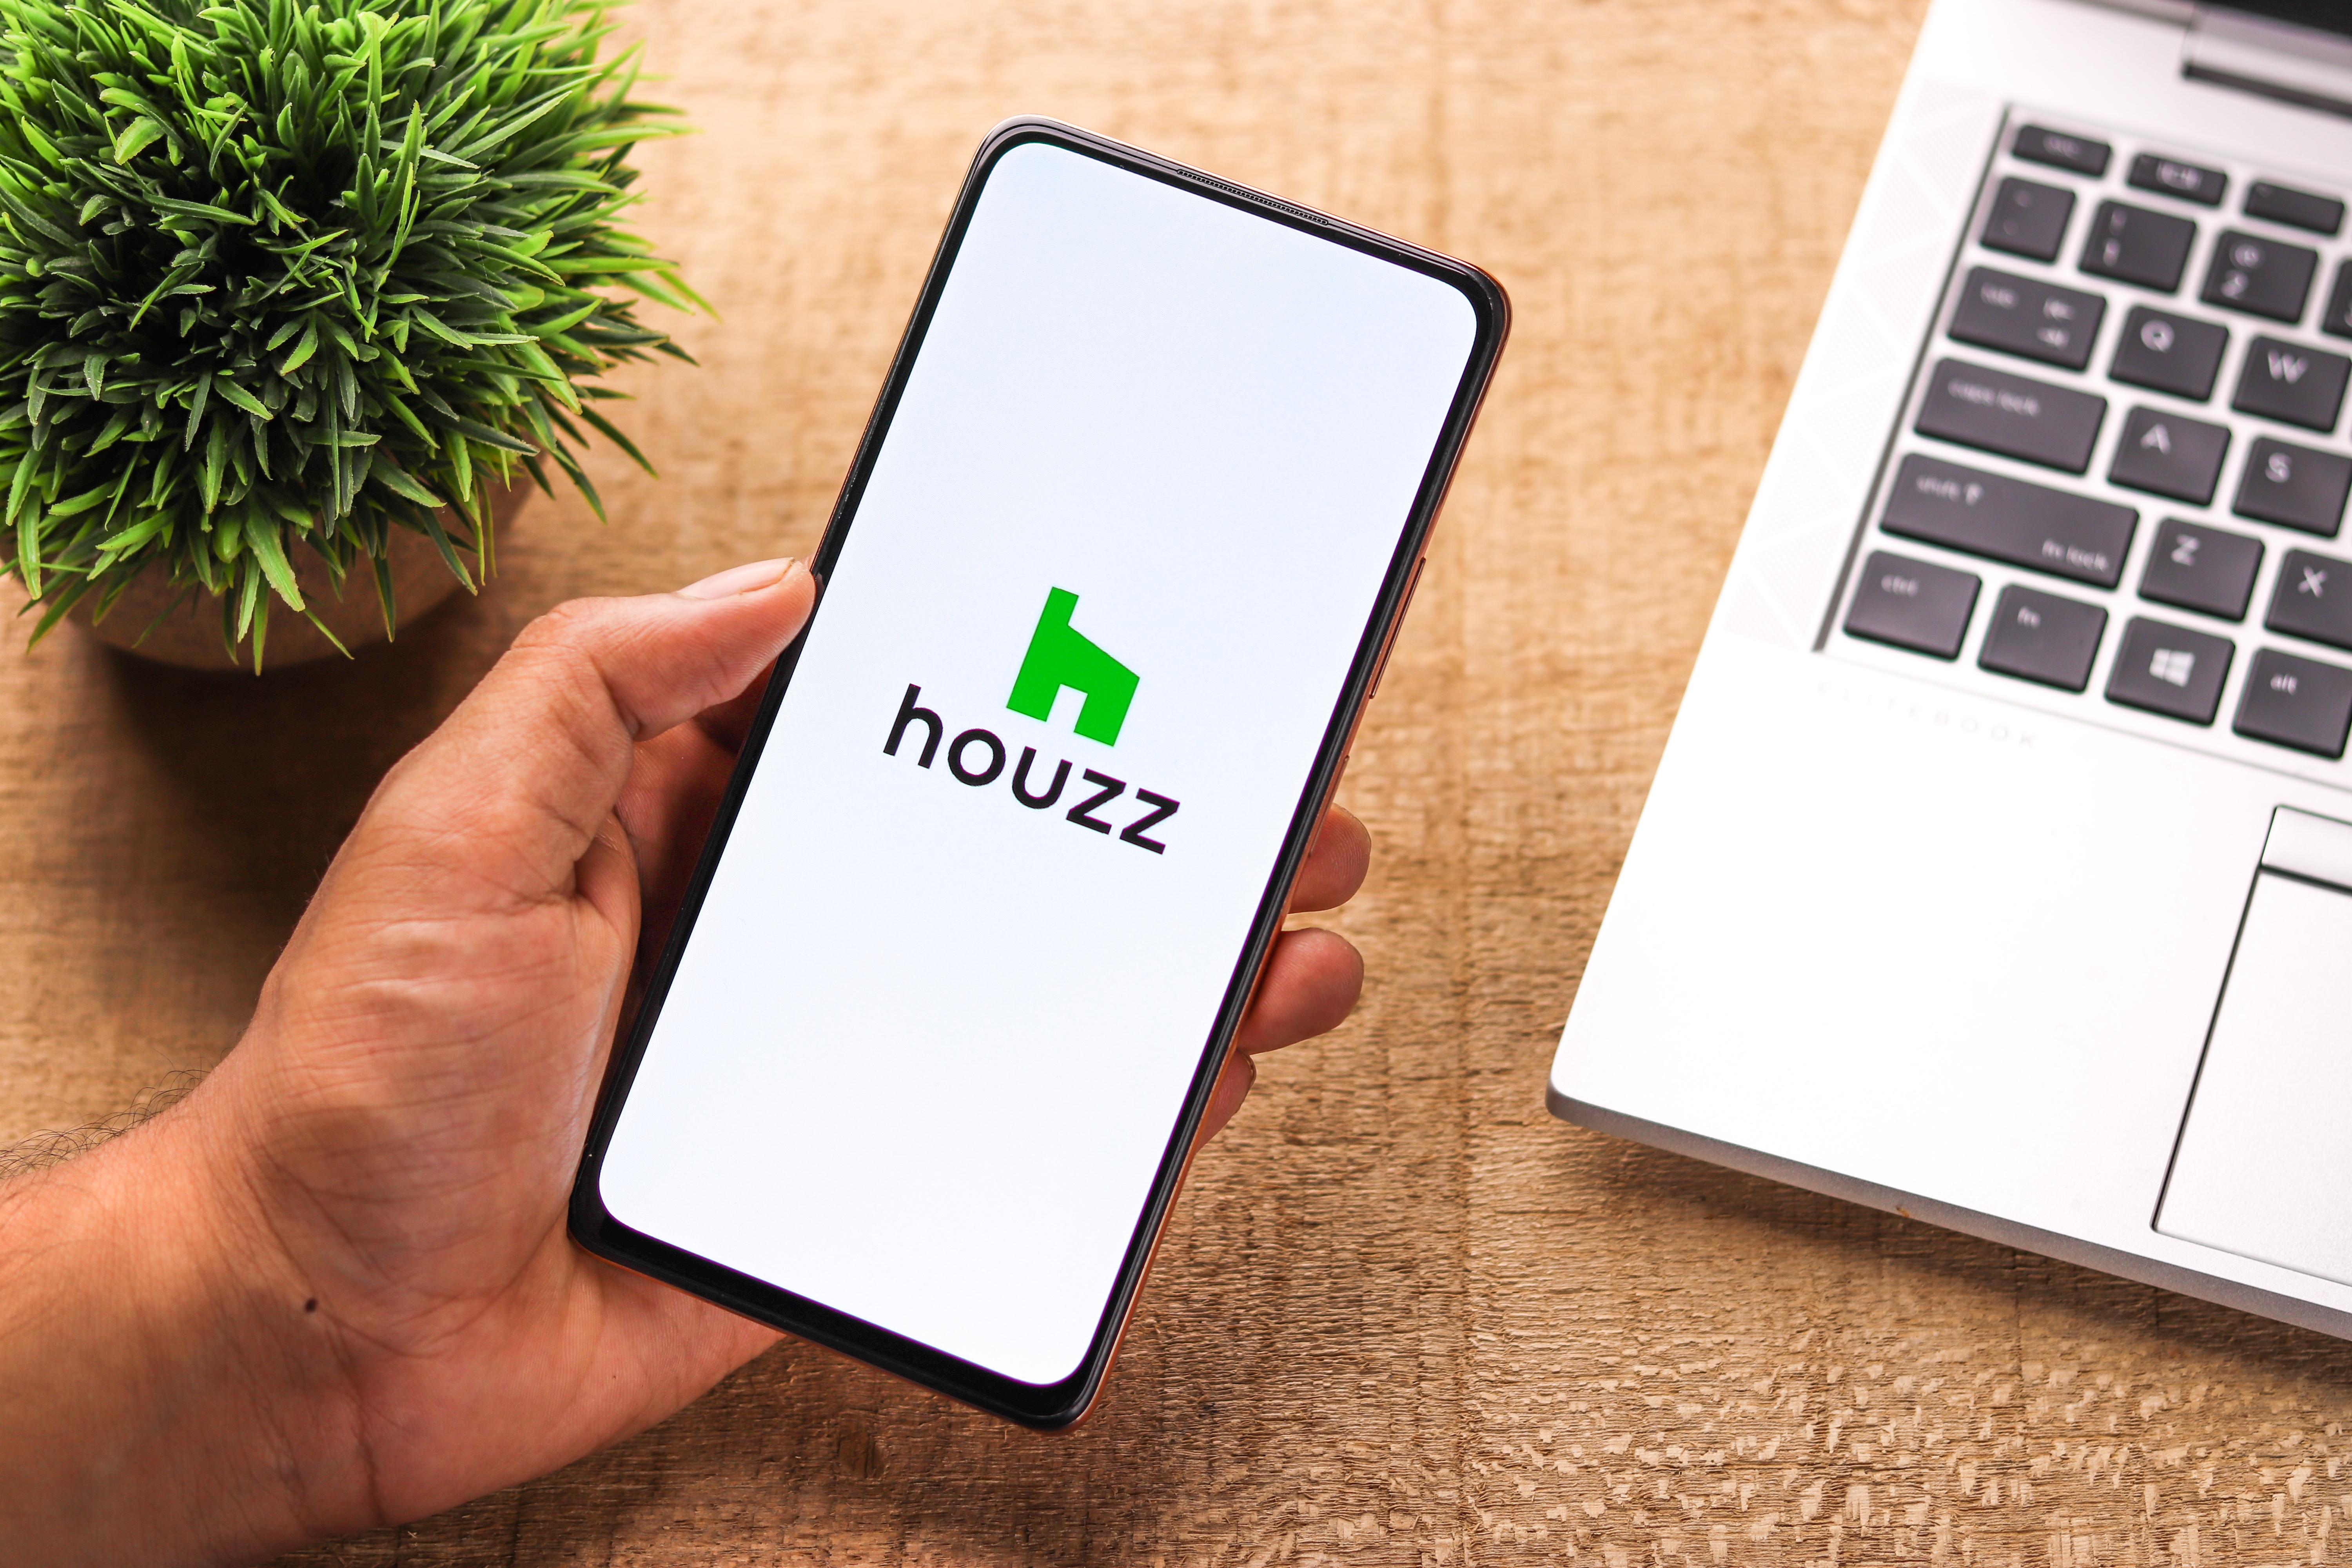 Smartphone displaying the Houzz logo